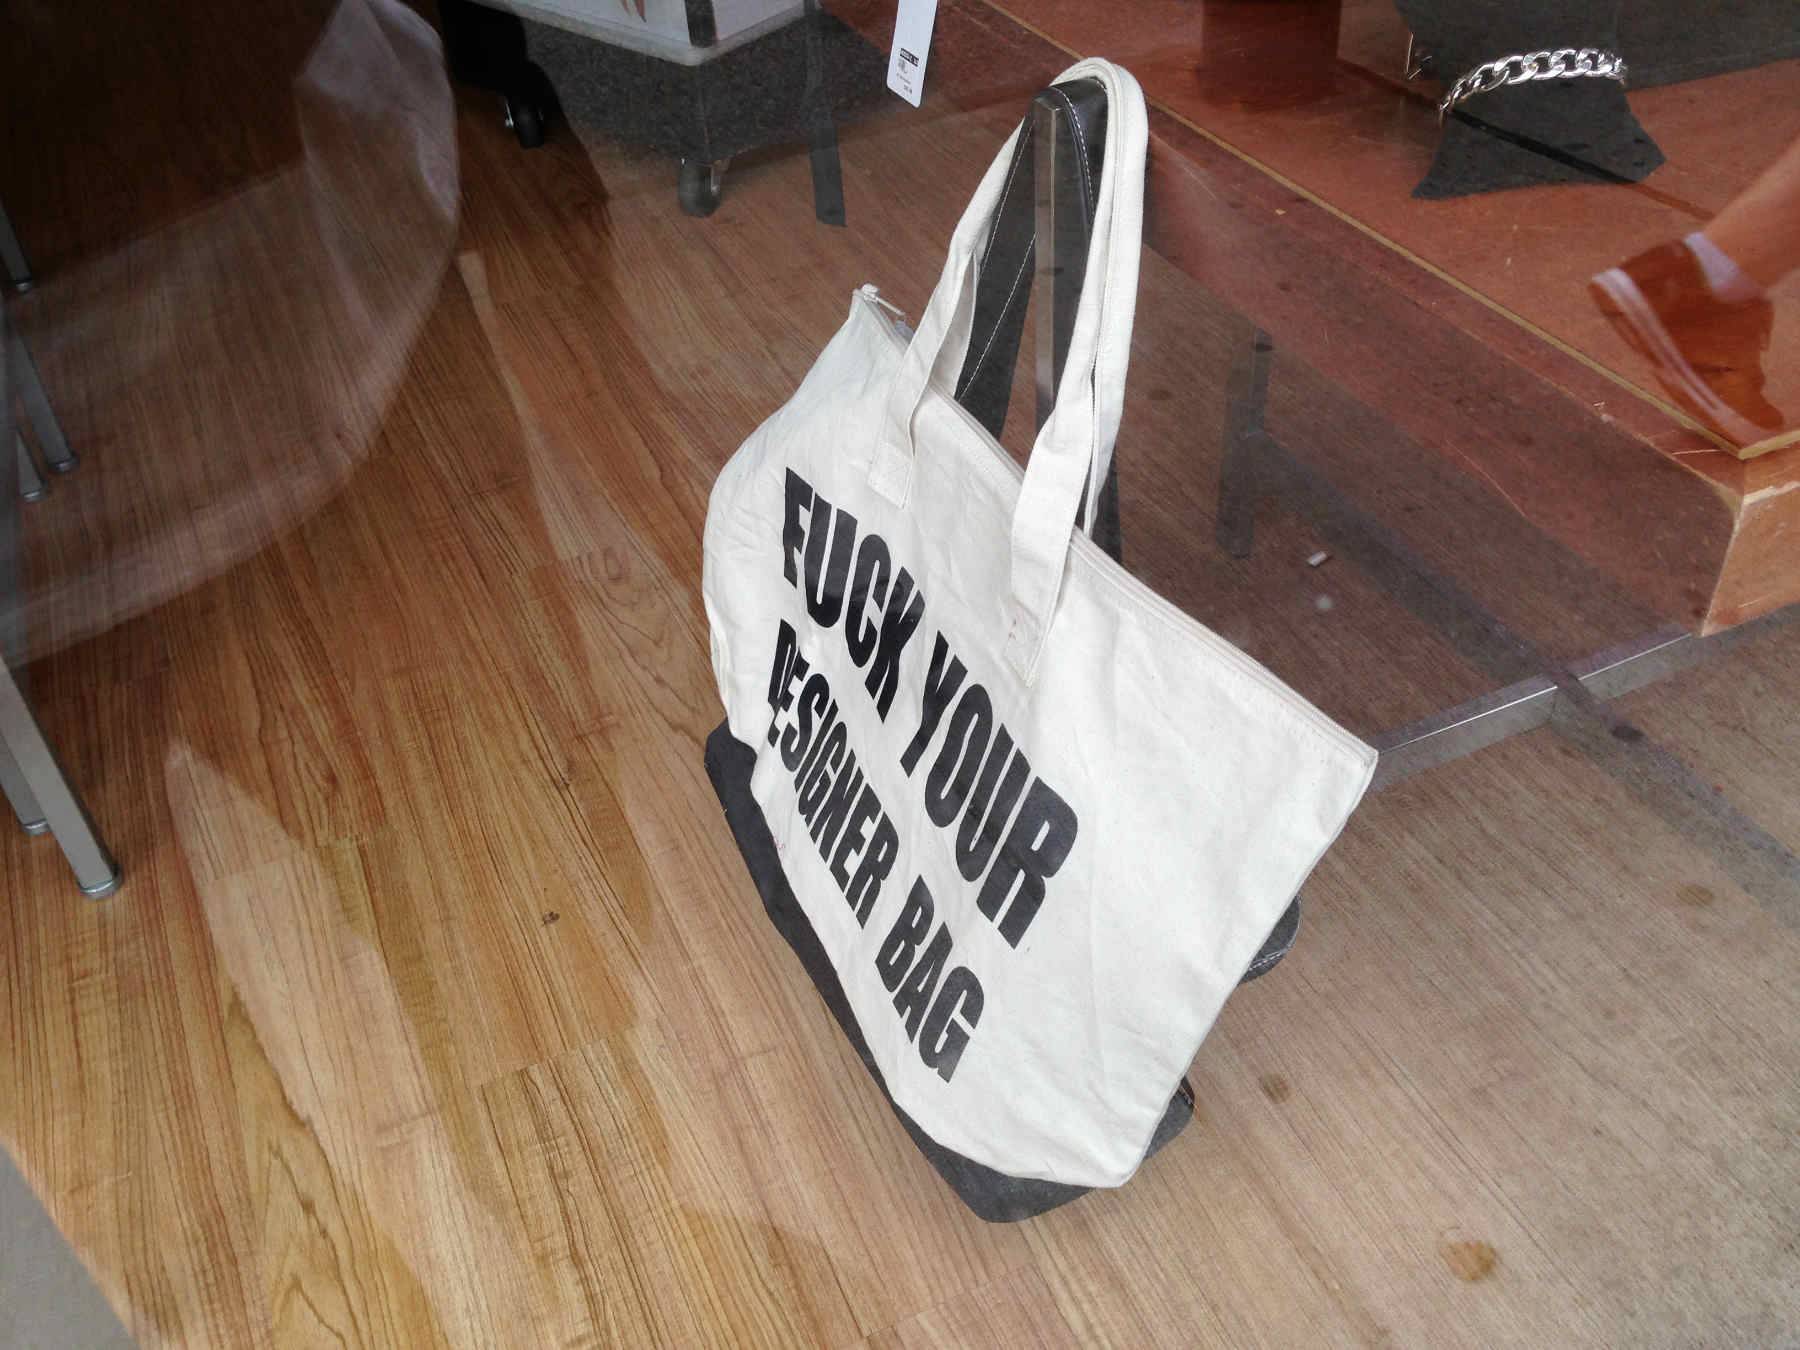 Calico bag saying “Fuck your designer bag”